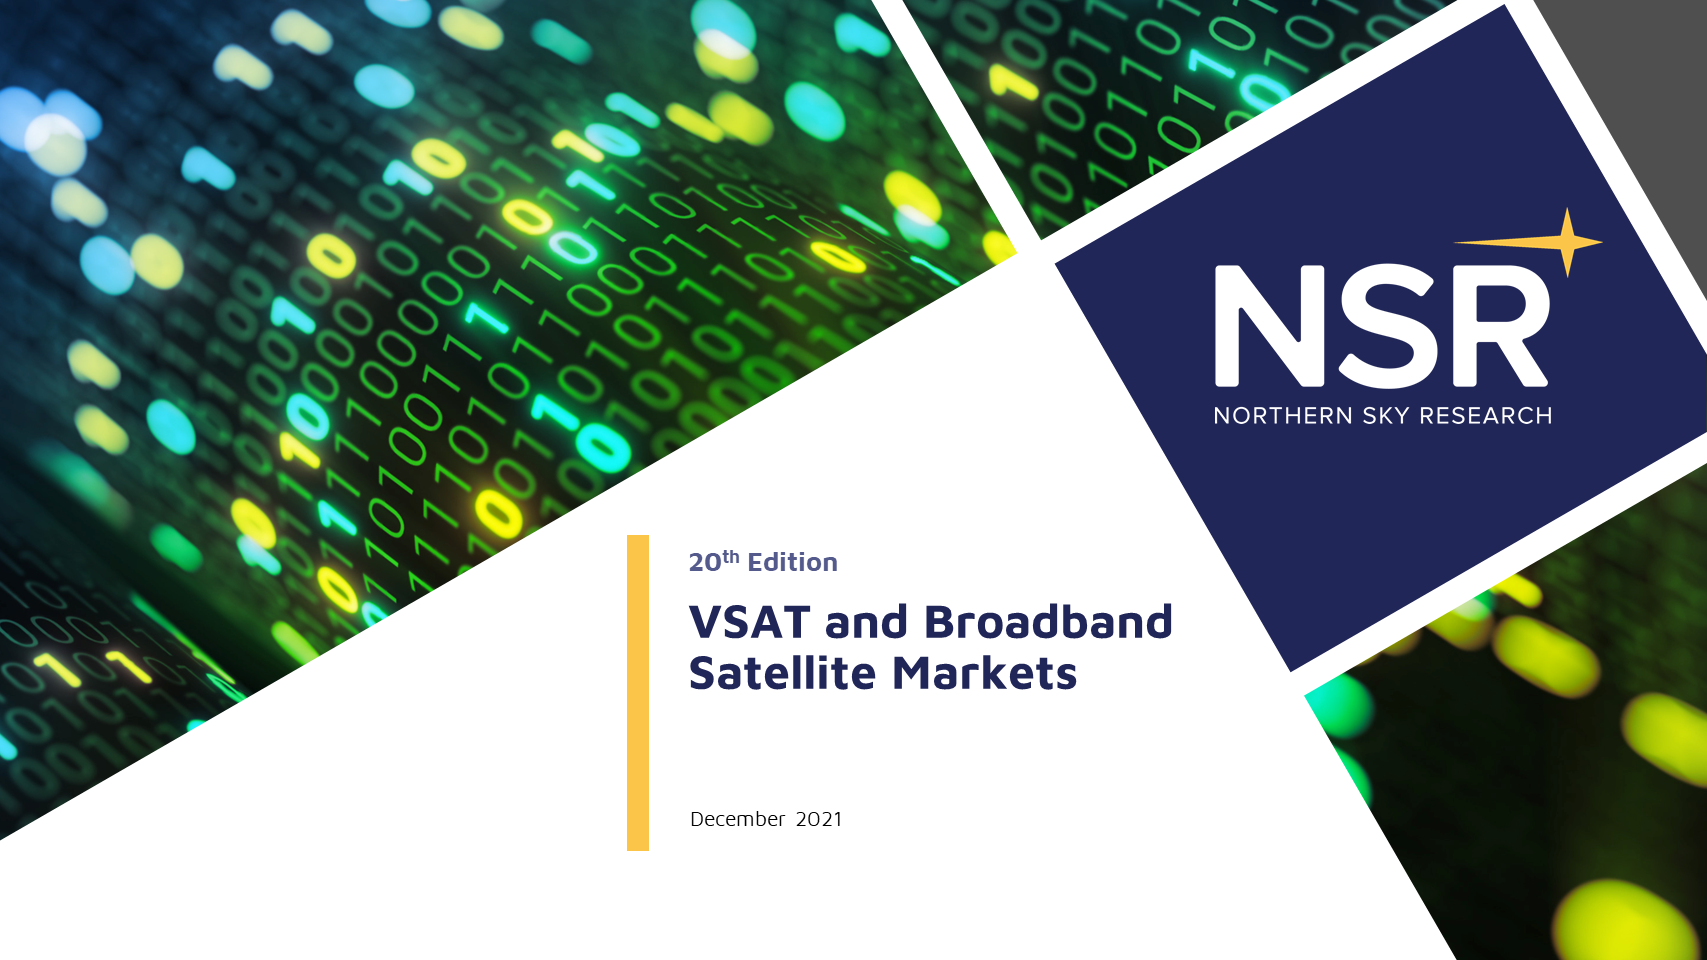 NSR’s VSAT and Broadband Satellite Market, 20th Edition